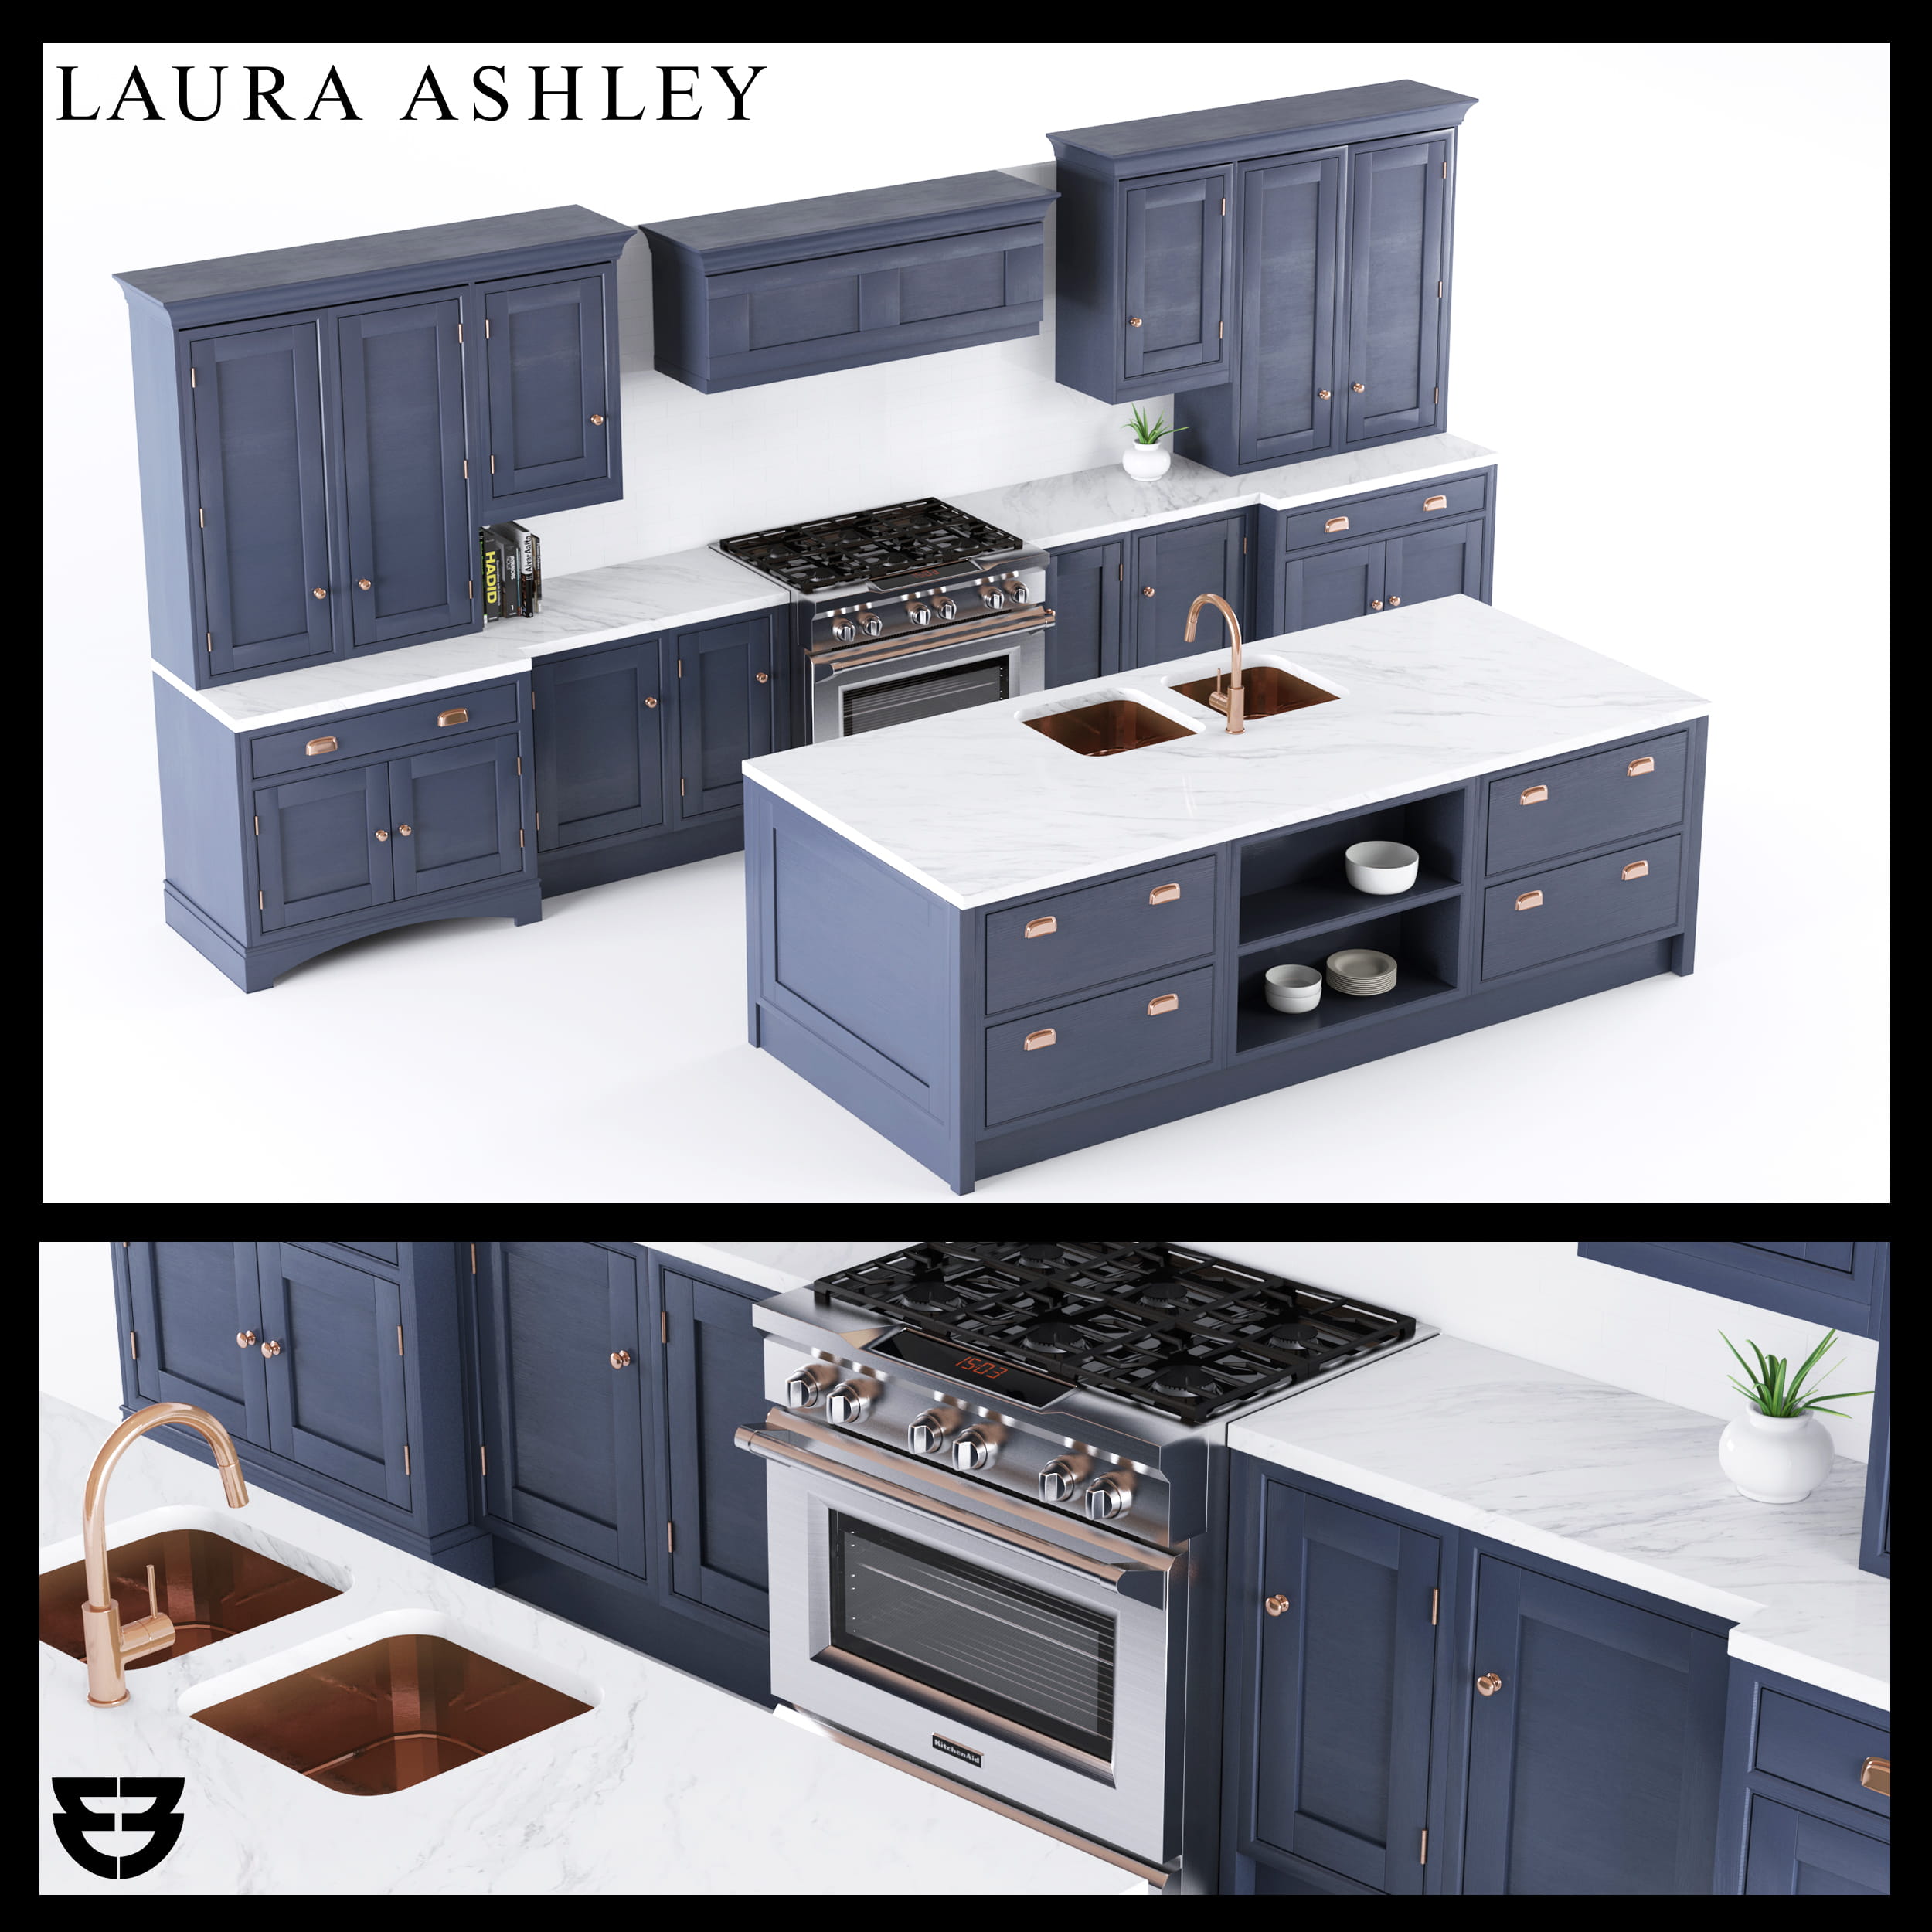 laura-ashley-helmsley-kitchen-3d-model